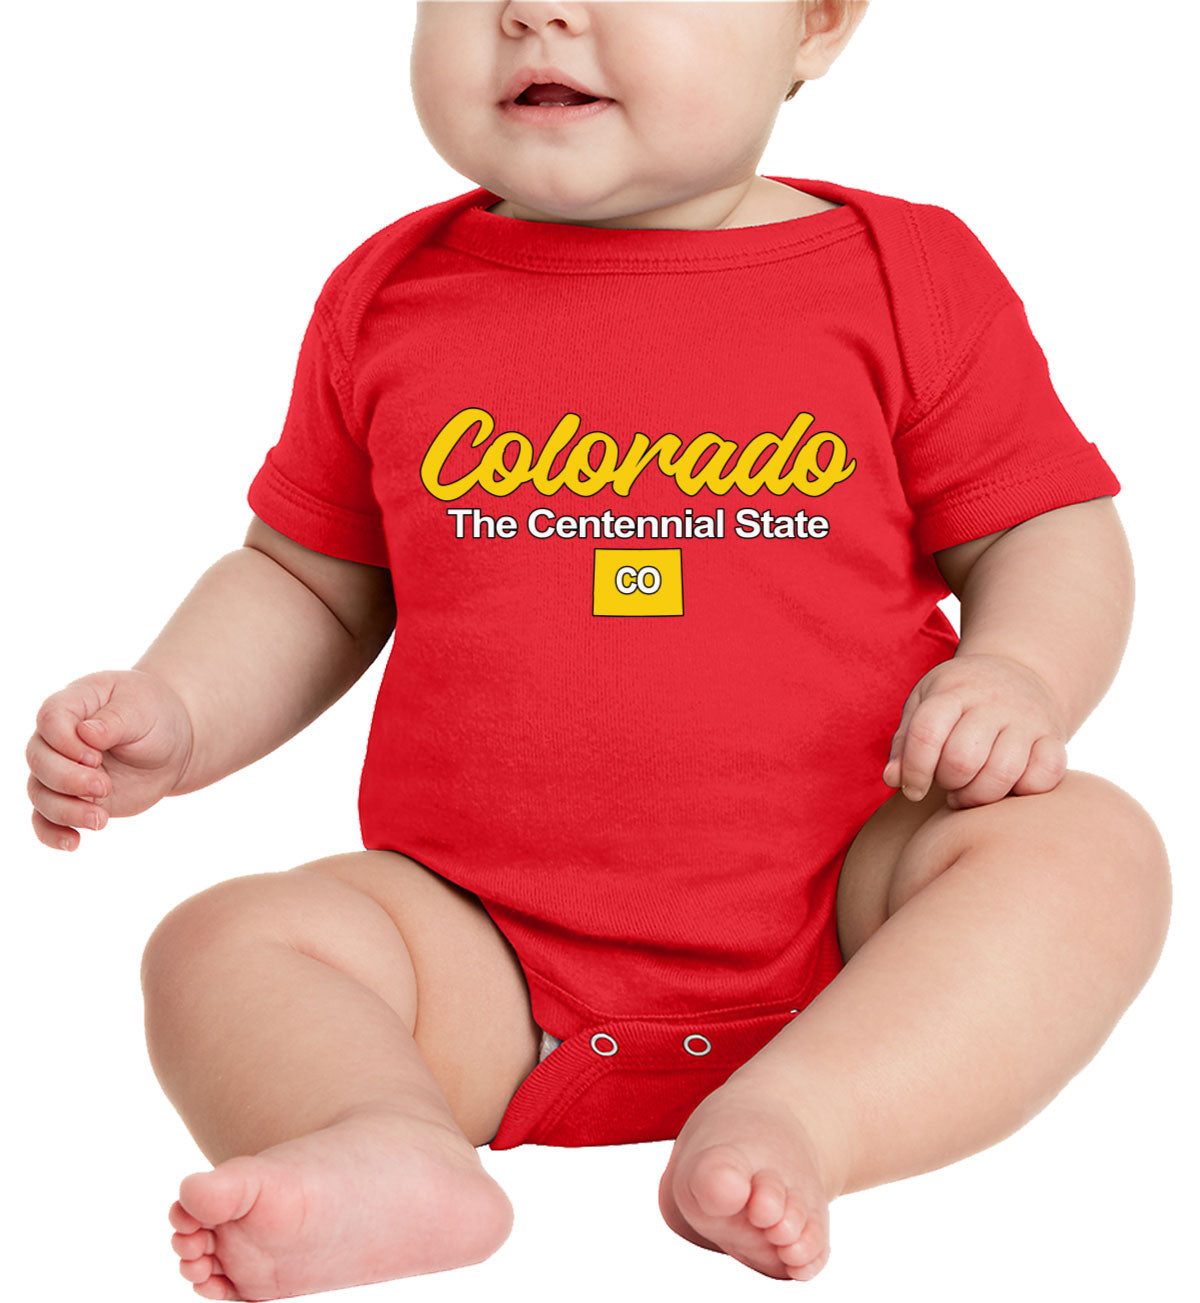 Colorado The Centennial State Baby Onesie